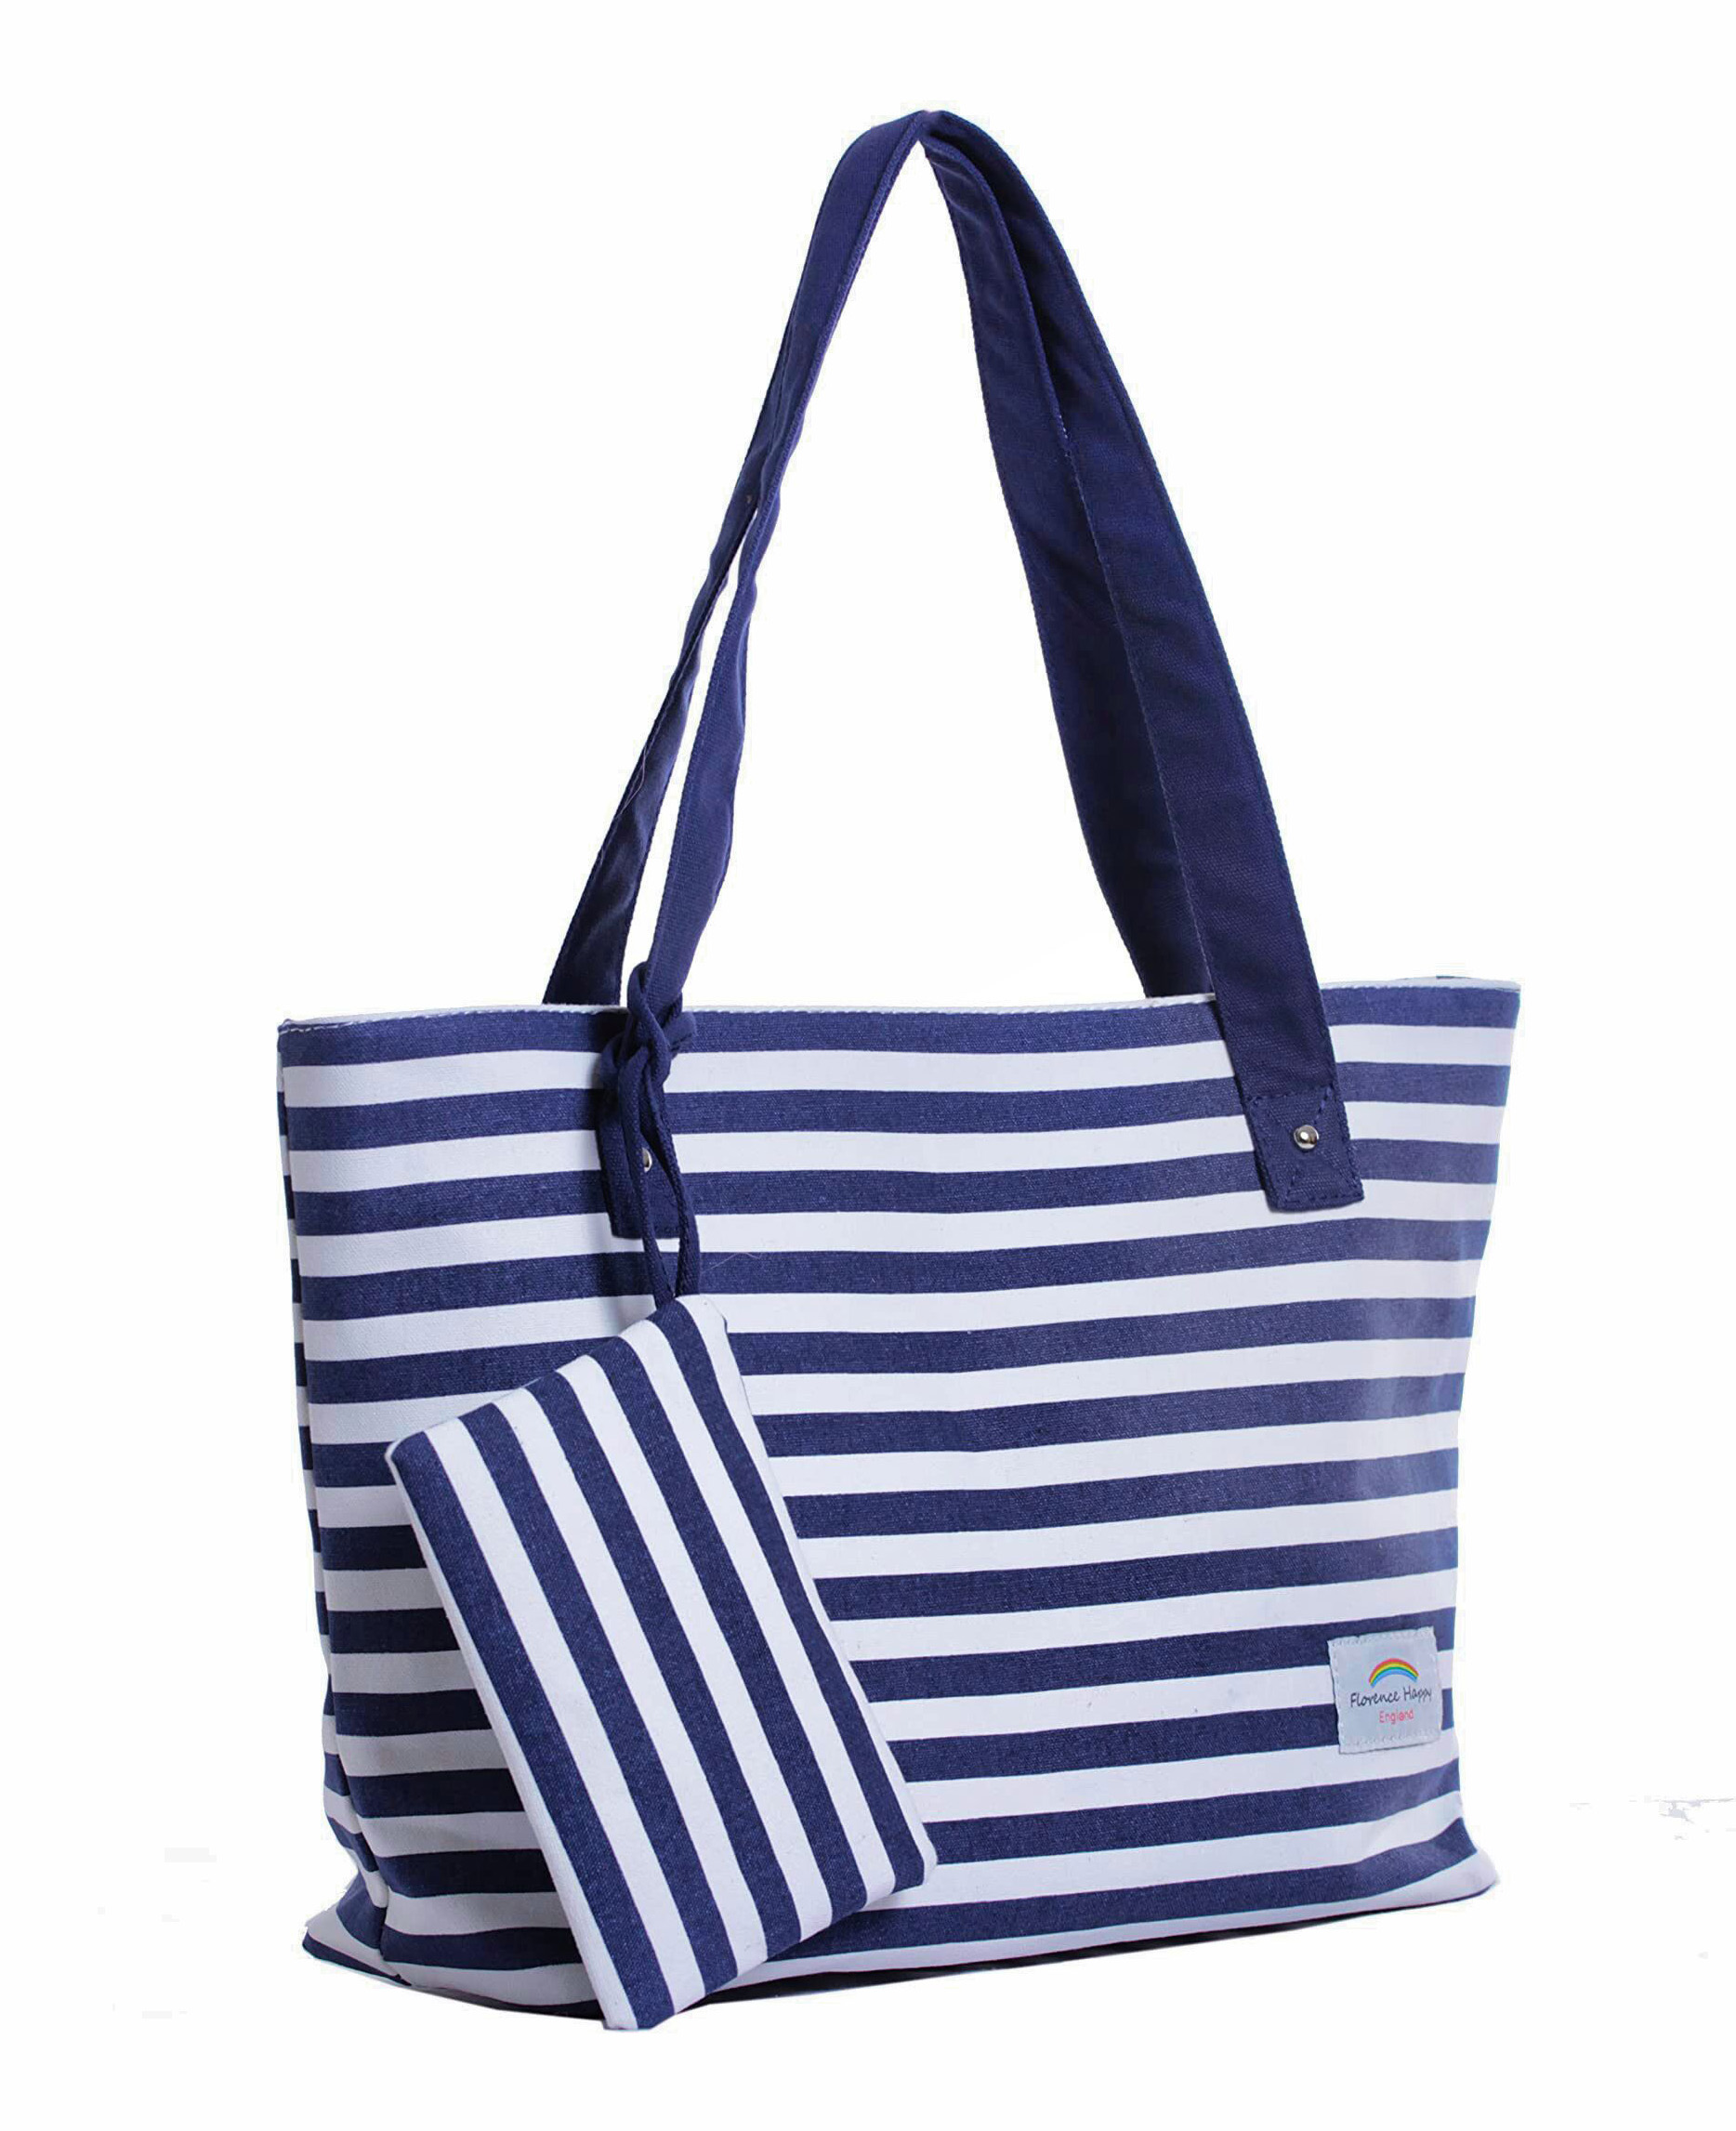 Tommy Hilfiger Handbag Purse Blue White Stripes | eBay